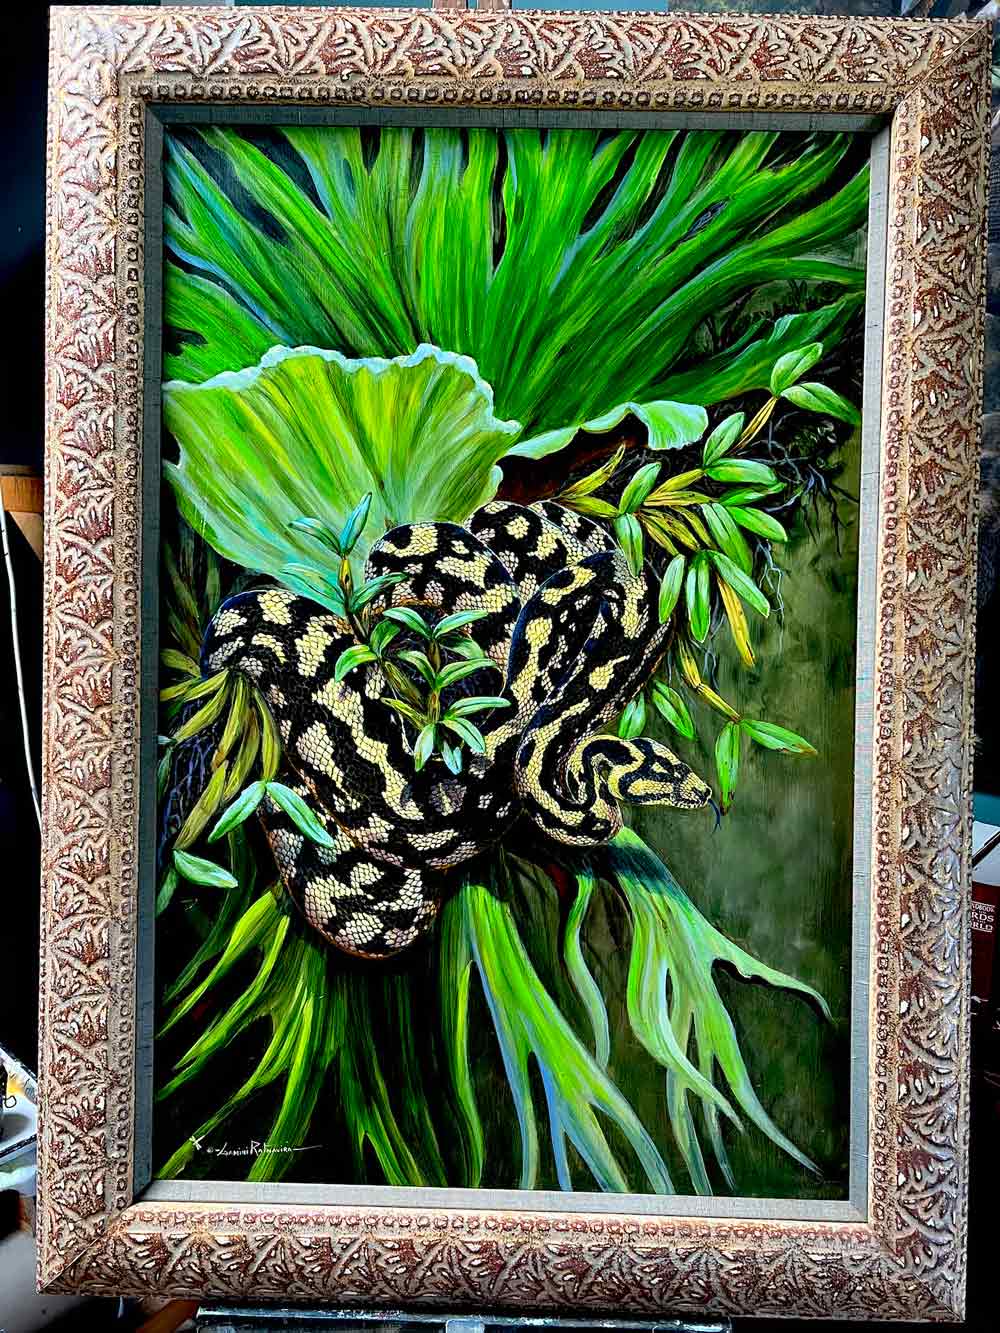 Carpet python with staghorn fern